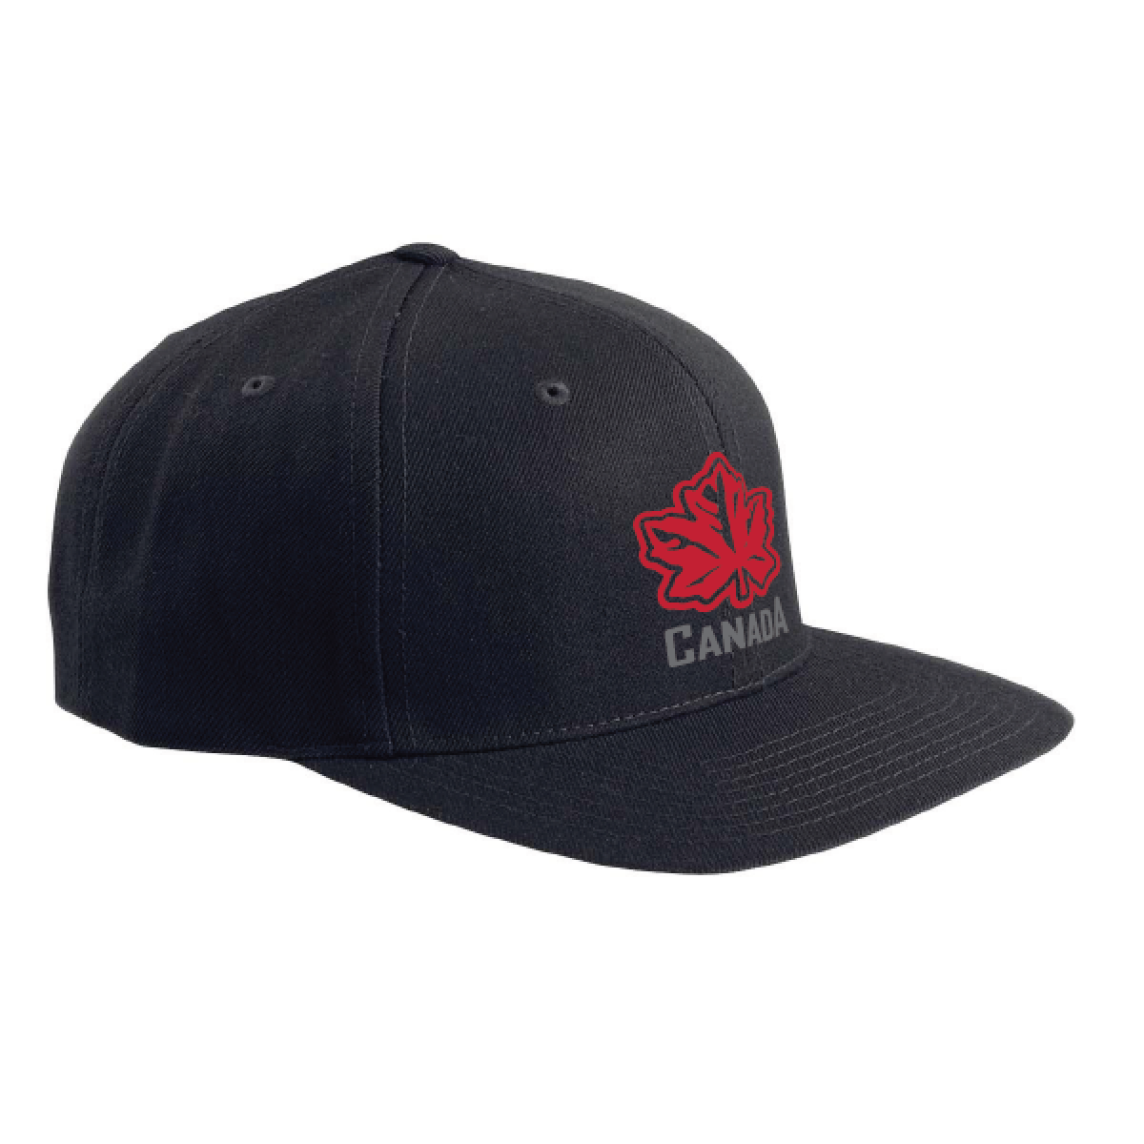 OCG Maple Leaf Canada embroidered on Black Felxfit Cap